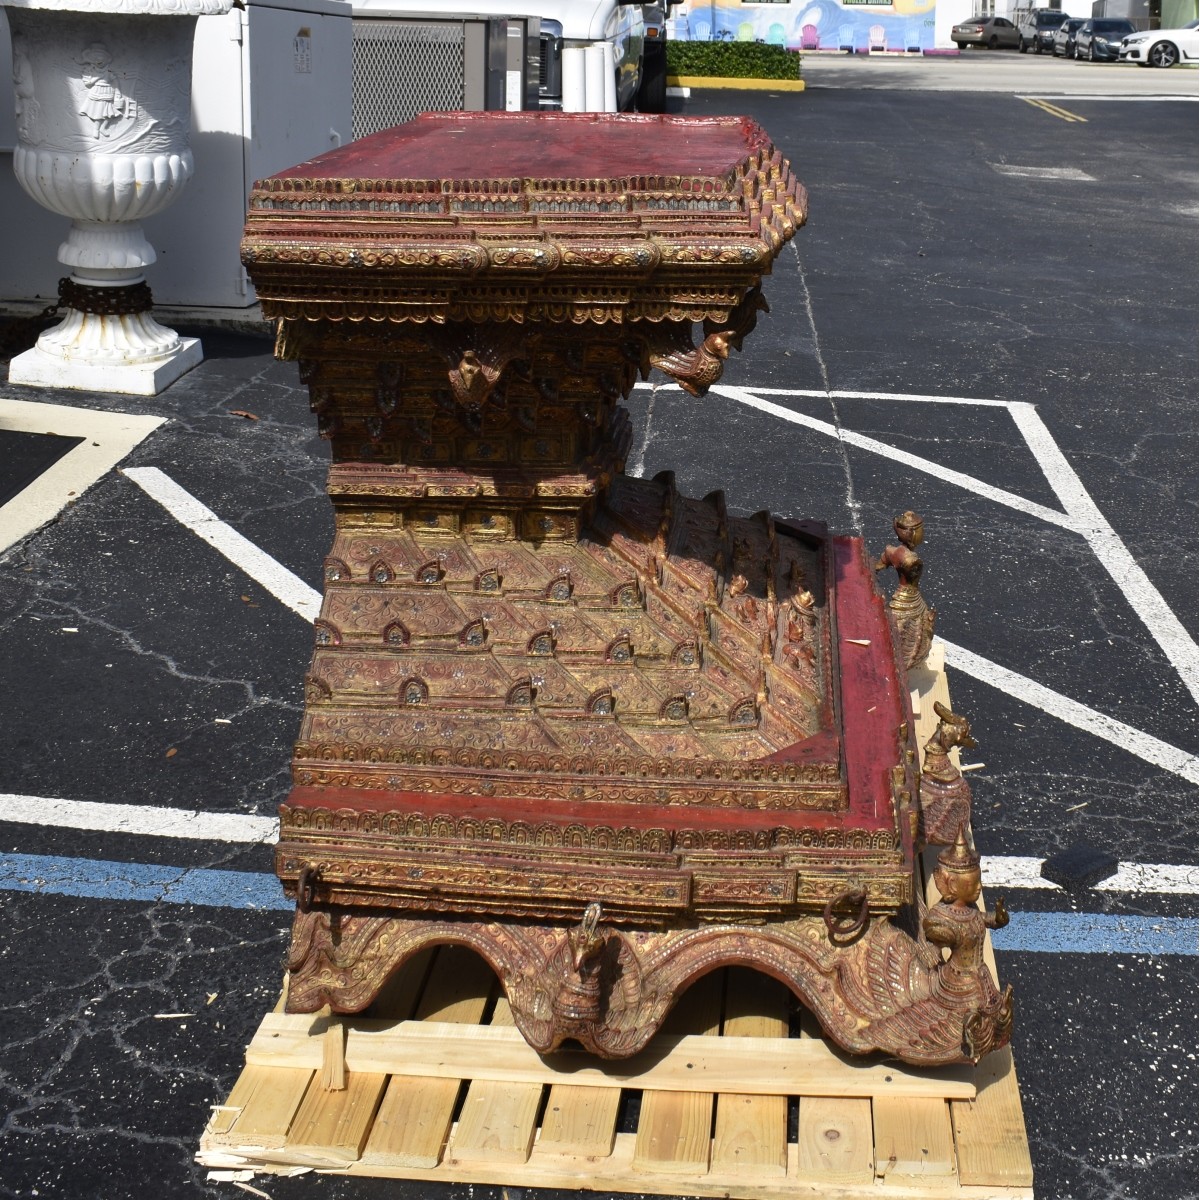 Antique Burmese Altar Throne / Pedestal